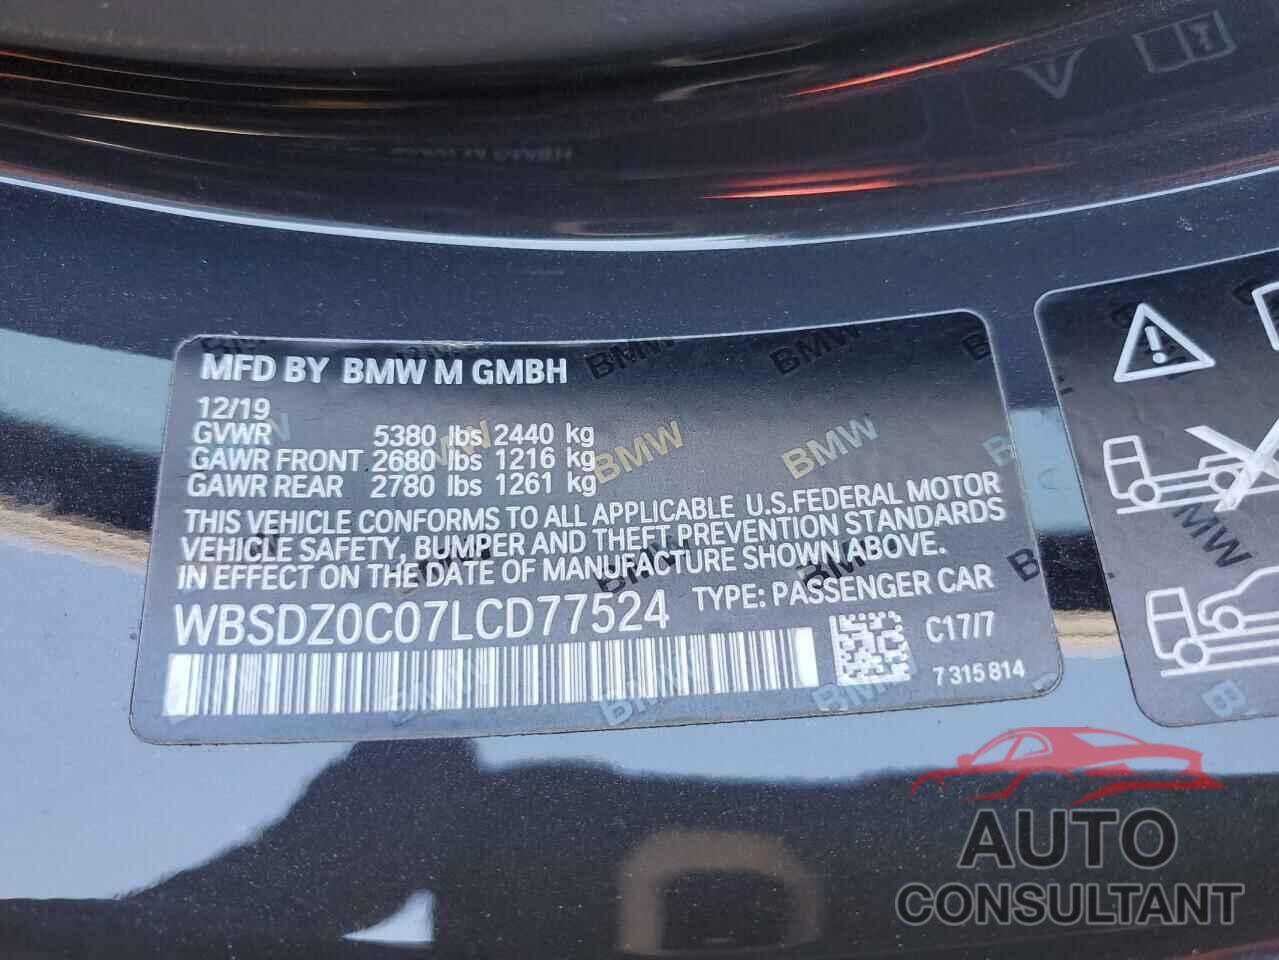 BMW M8 2020 - WBSDZ0C07LCD77524